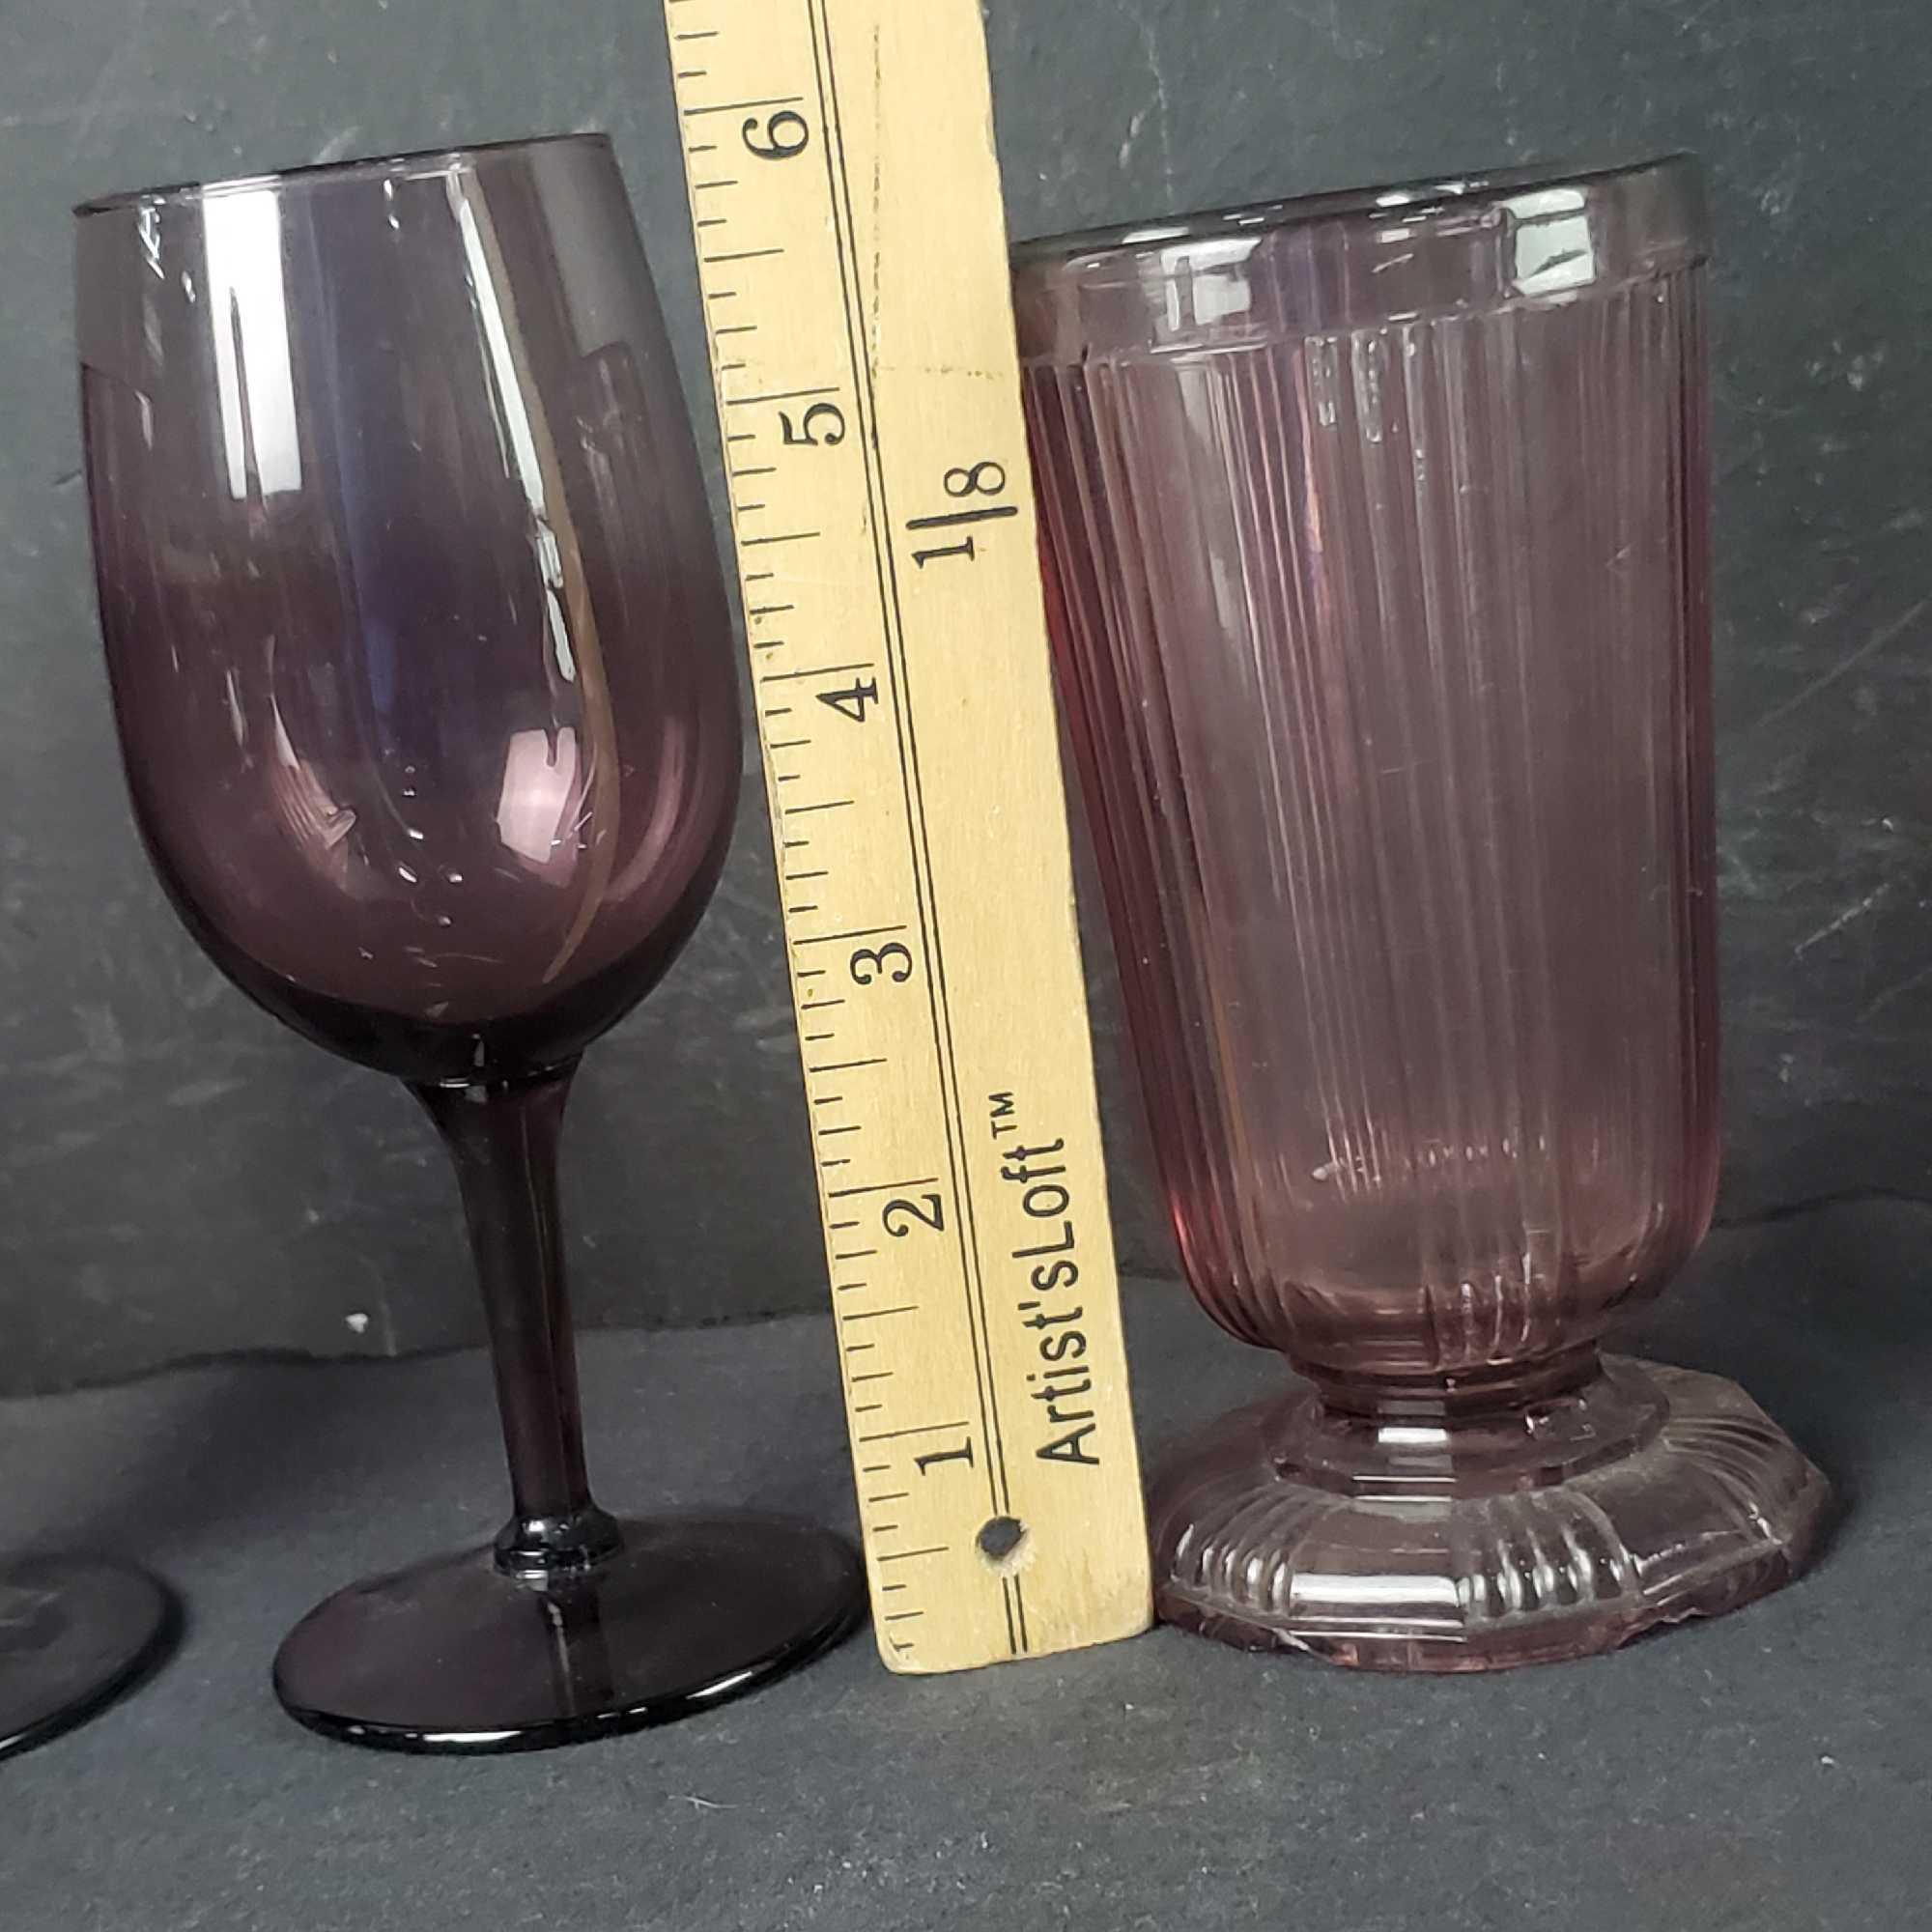 Bin of various colered glassware